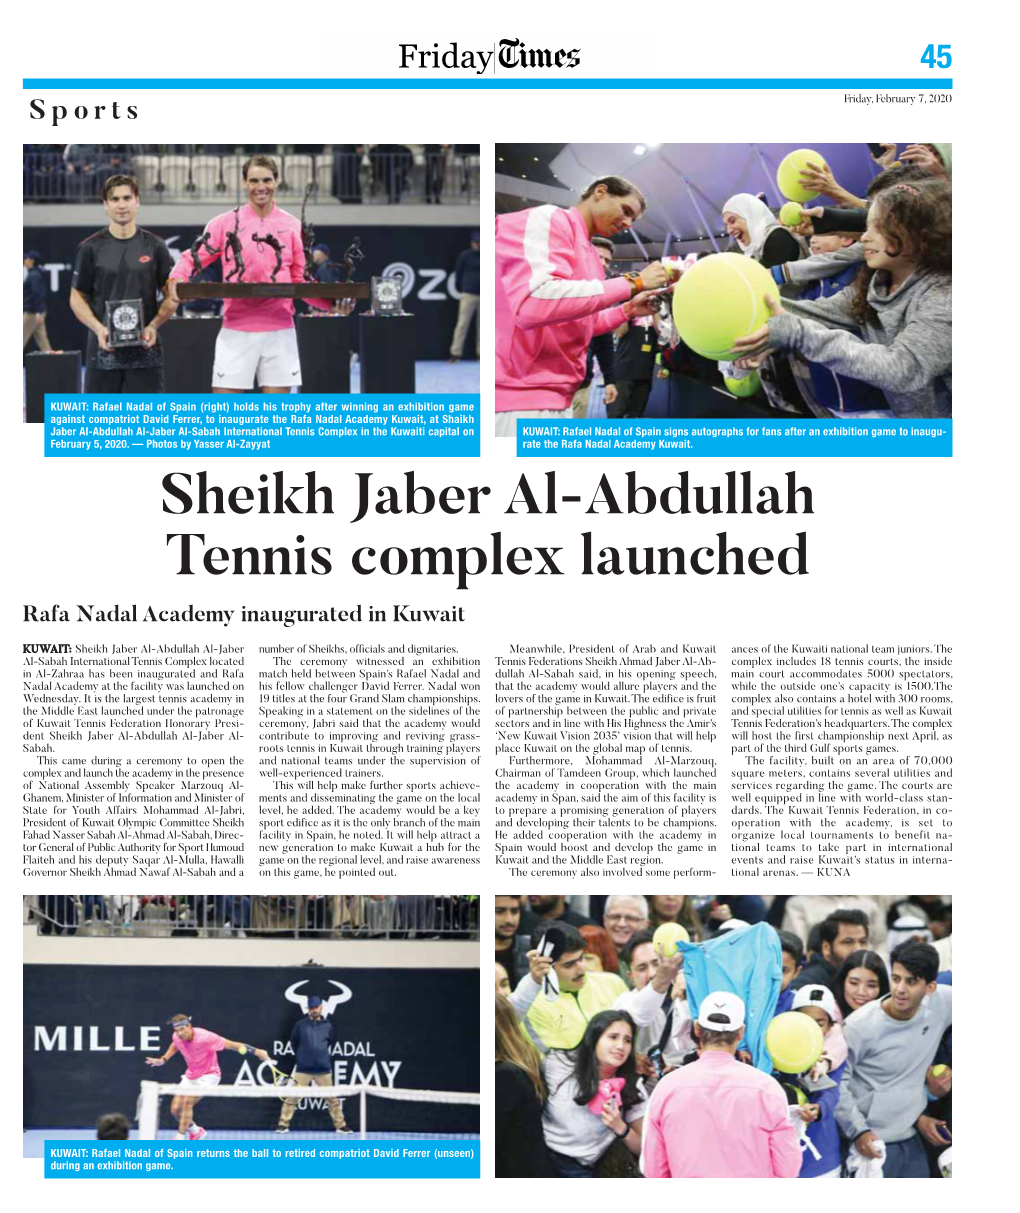 Sheikh Jaber Al-Abdullah Tennis Complex Launched Rafa Nadal Academy Inaugurated in Kuwait